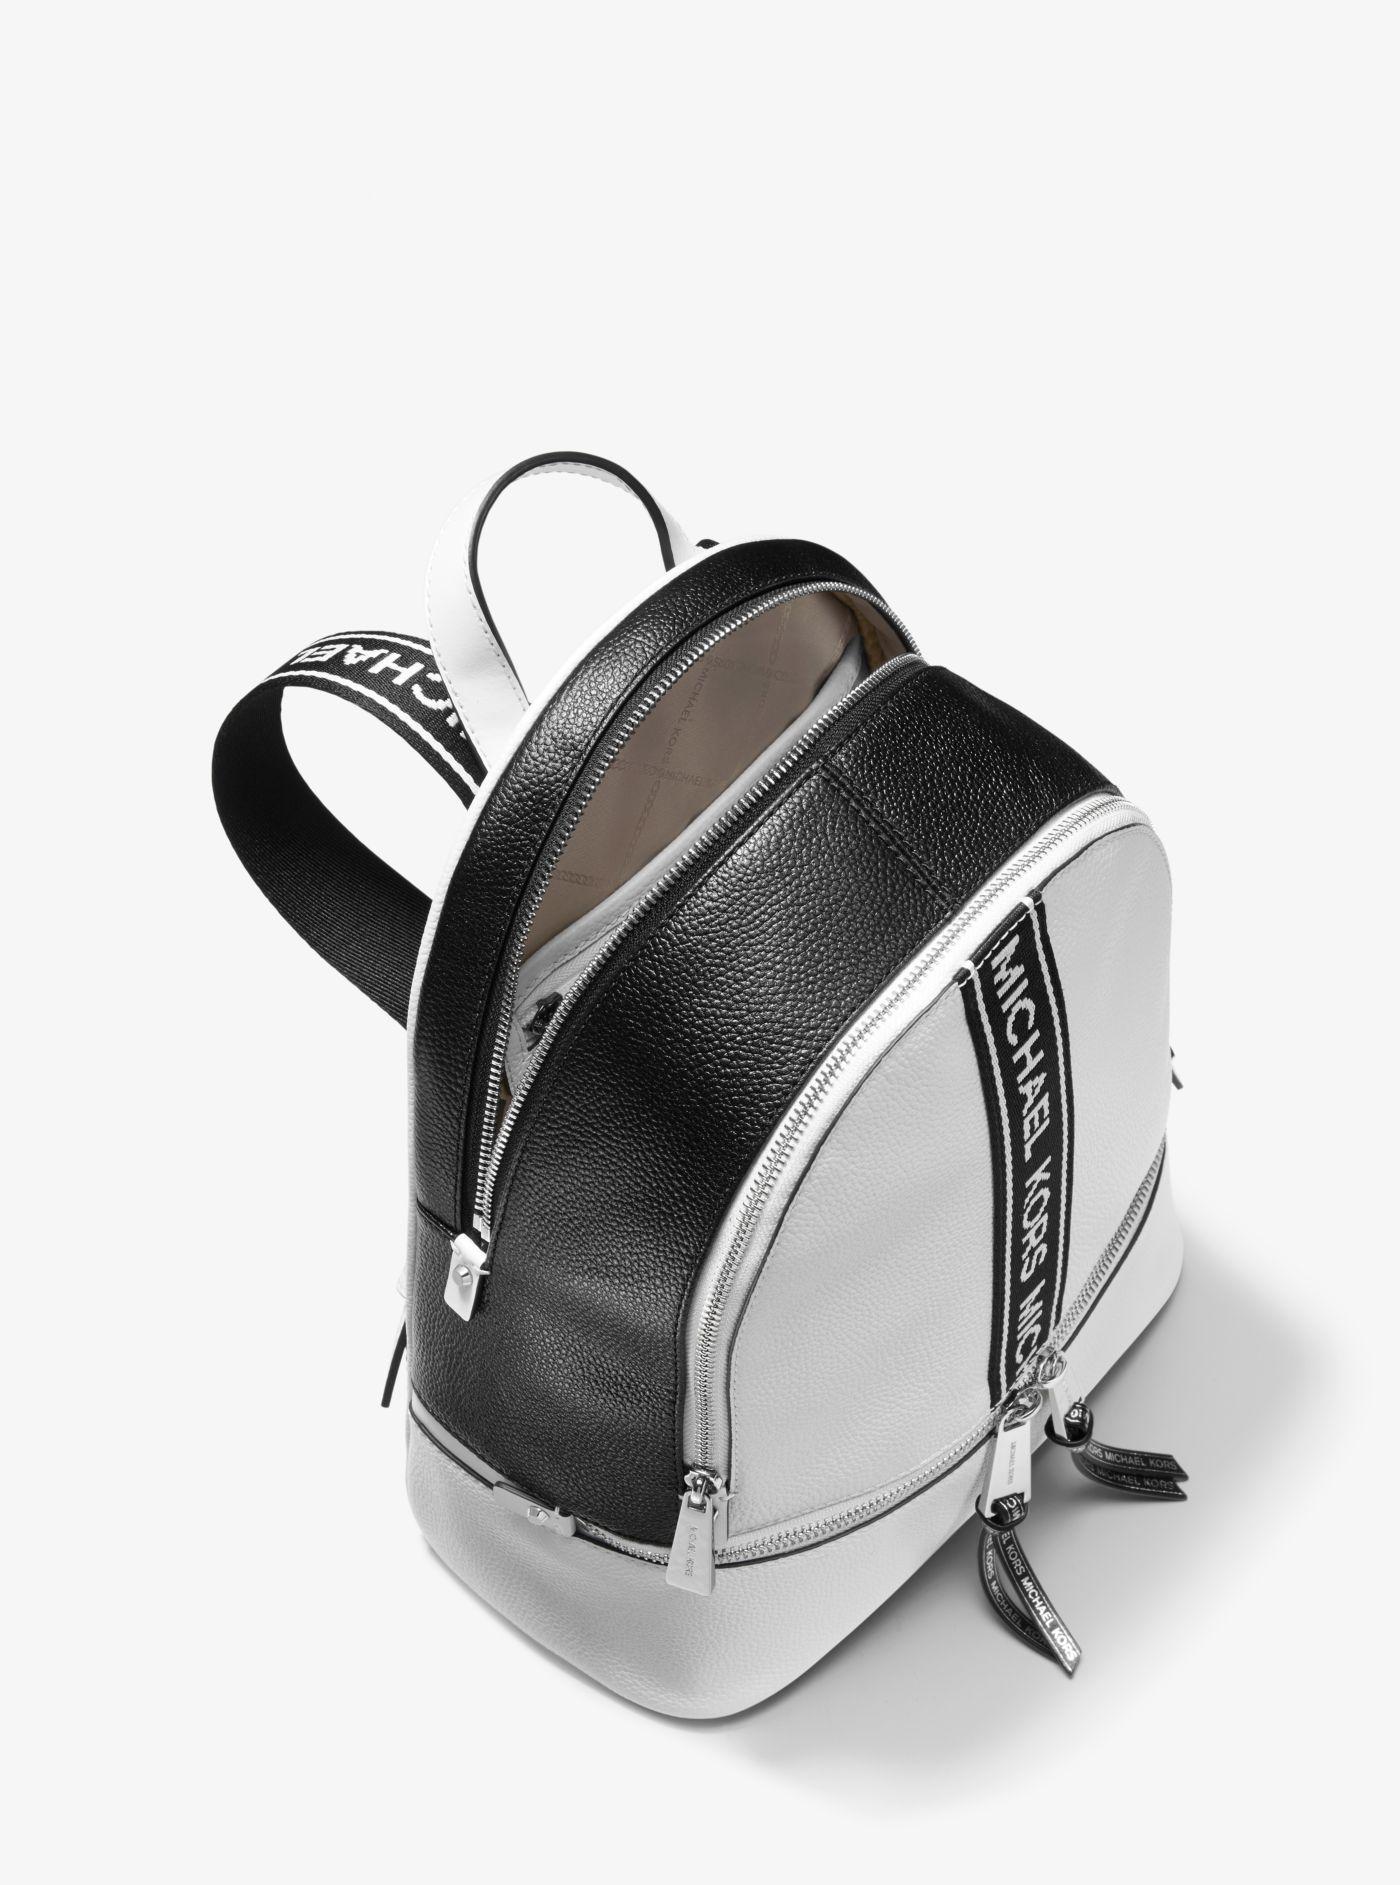 michael kors black and white backpack